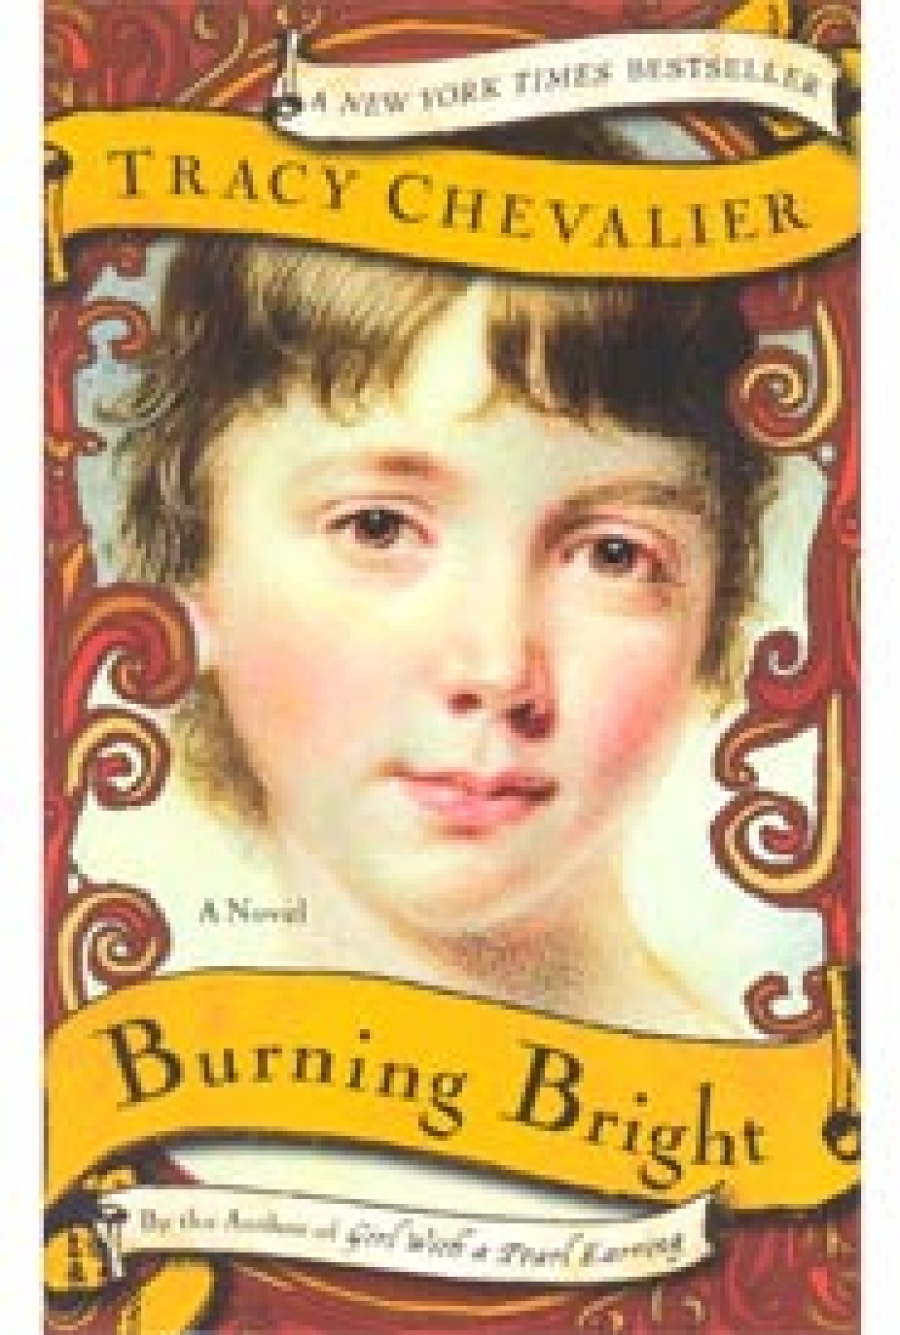 Chevalier, Tracy Burning Bright 